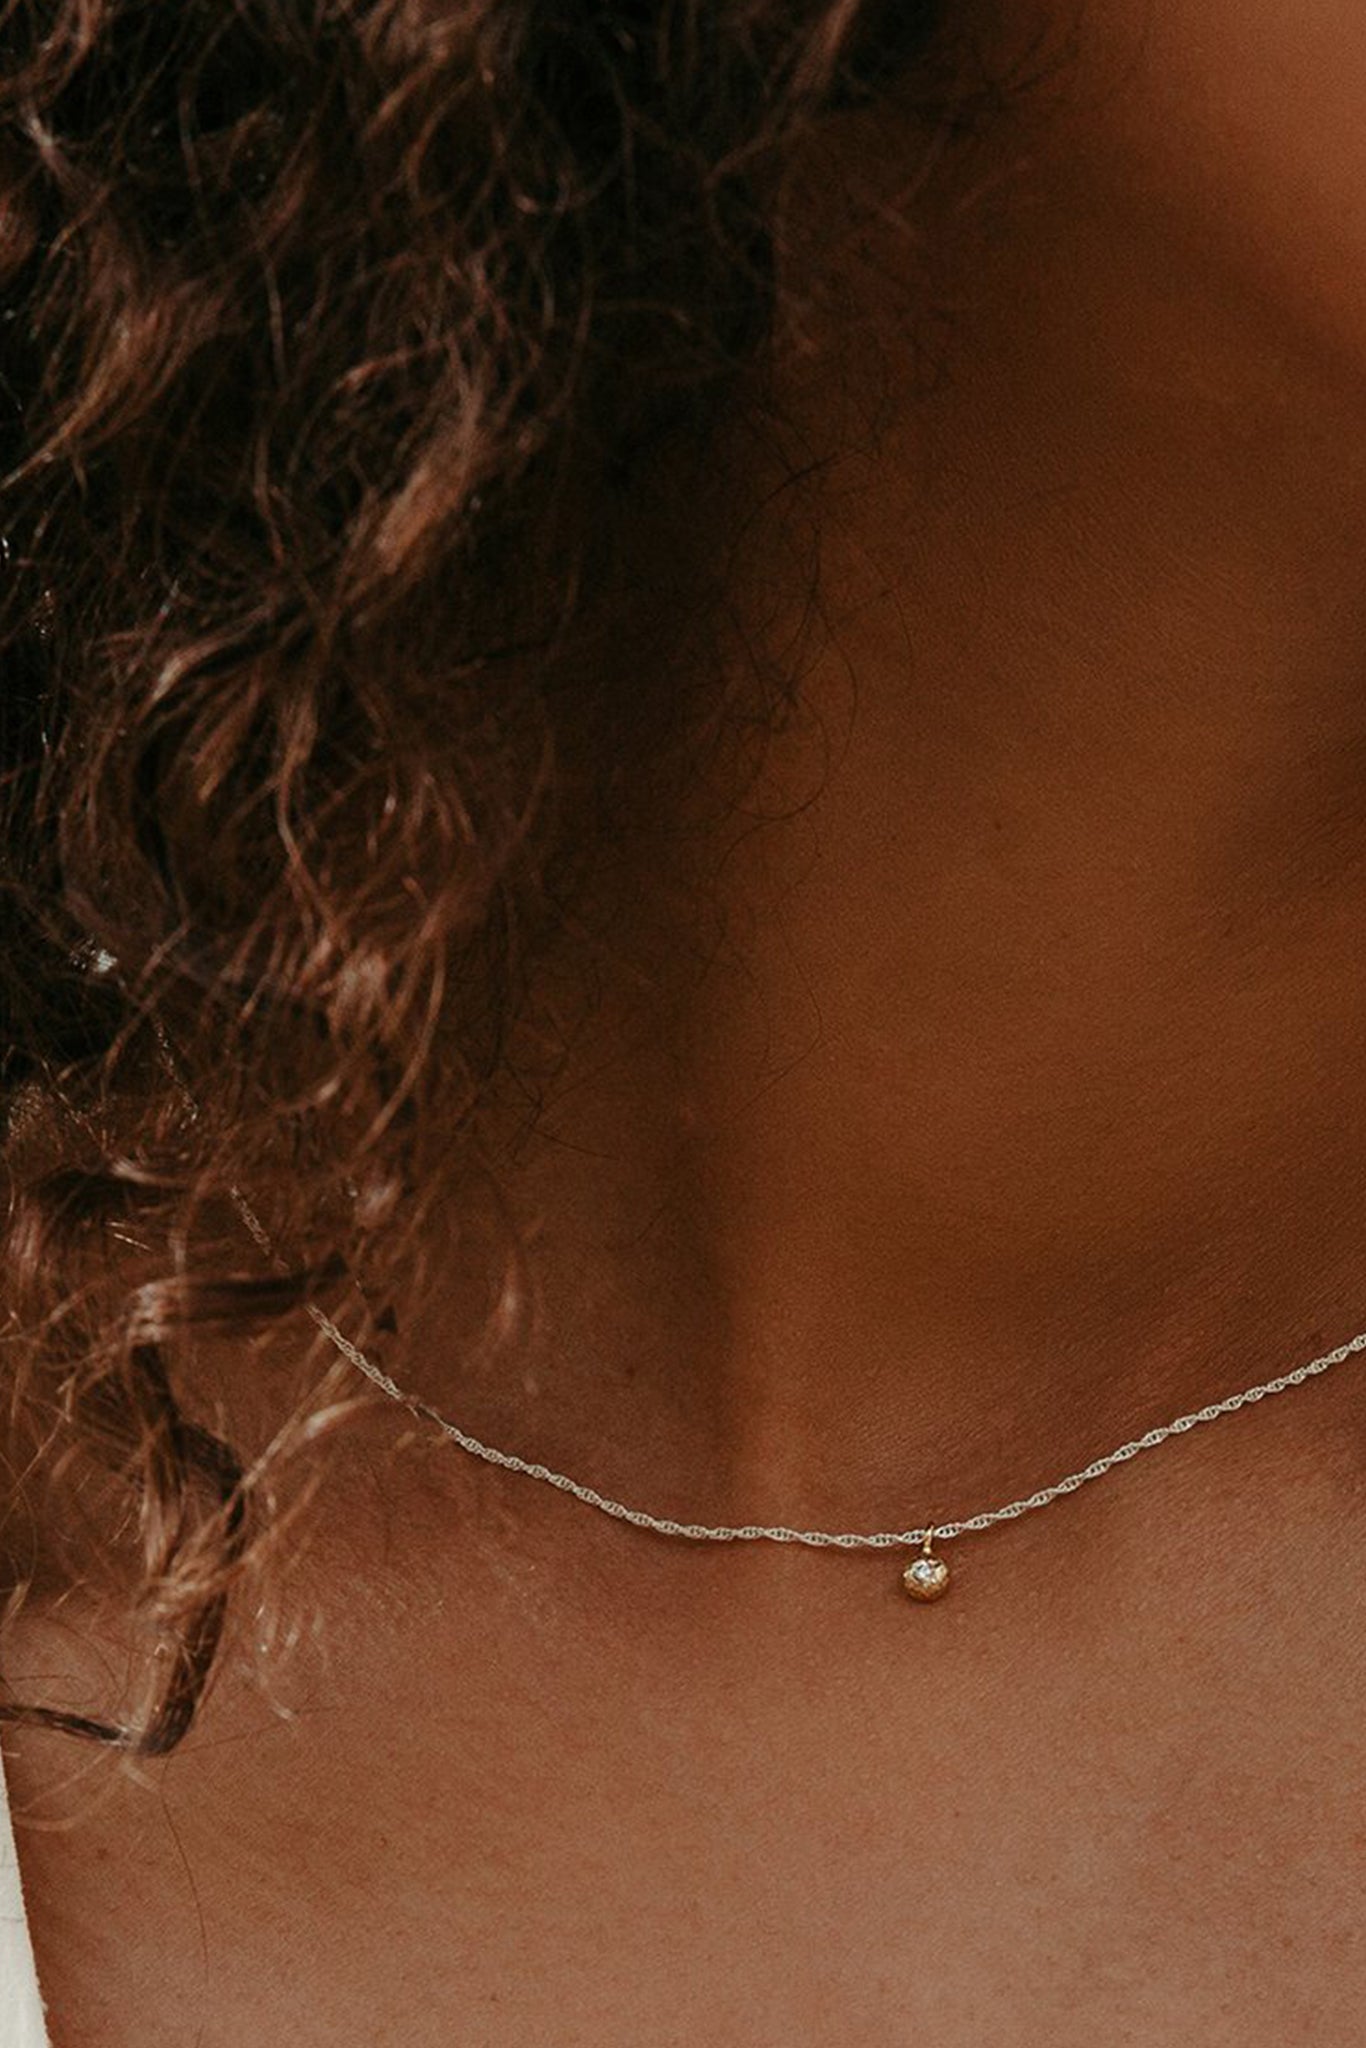 sterling-silver-diamond-necklace-dainty-fine-jewelry